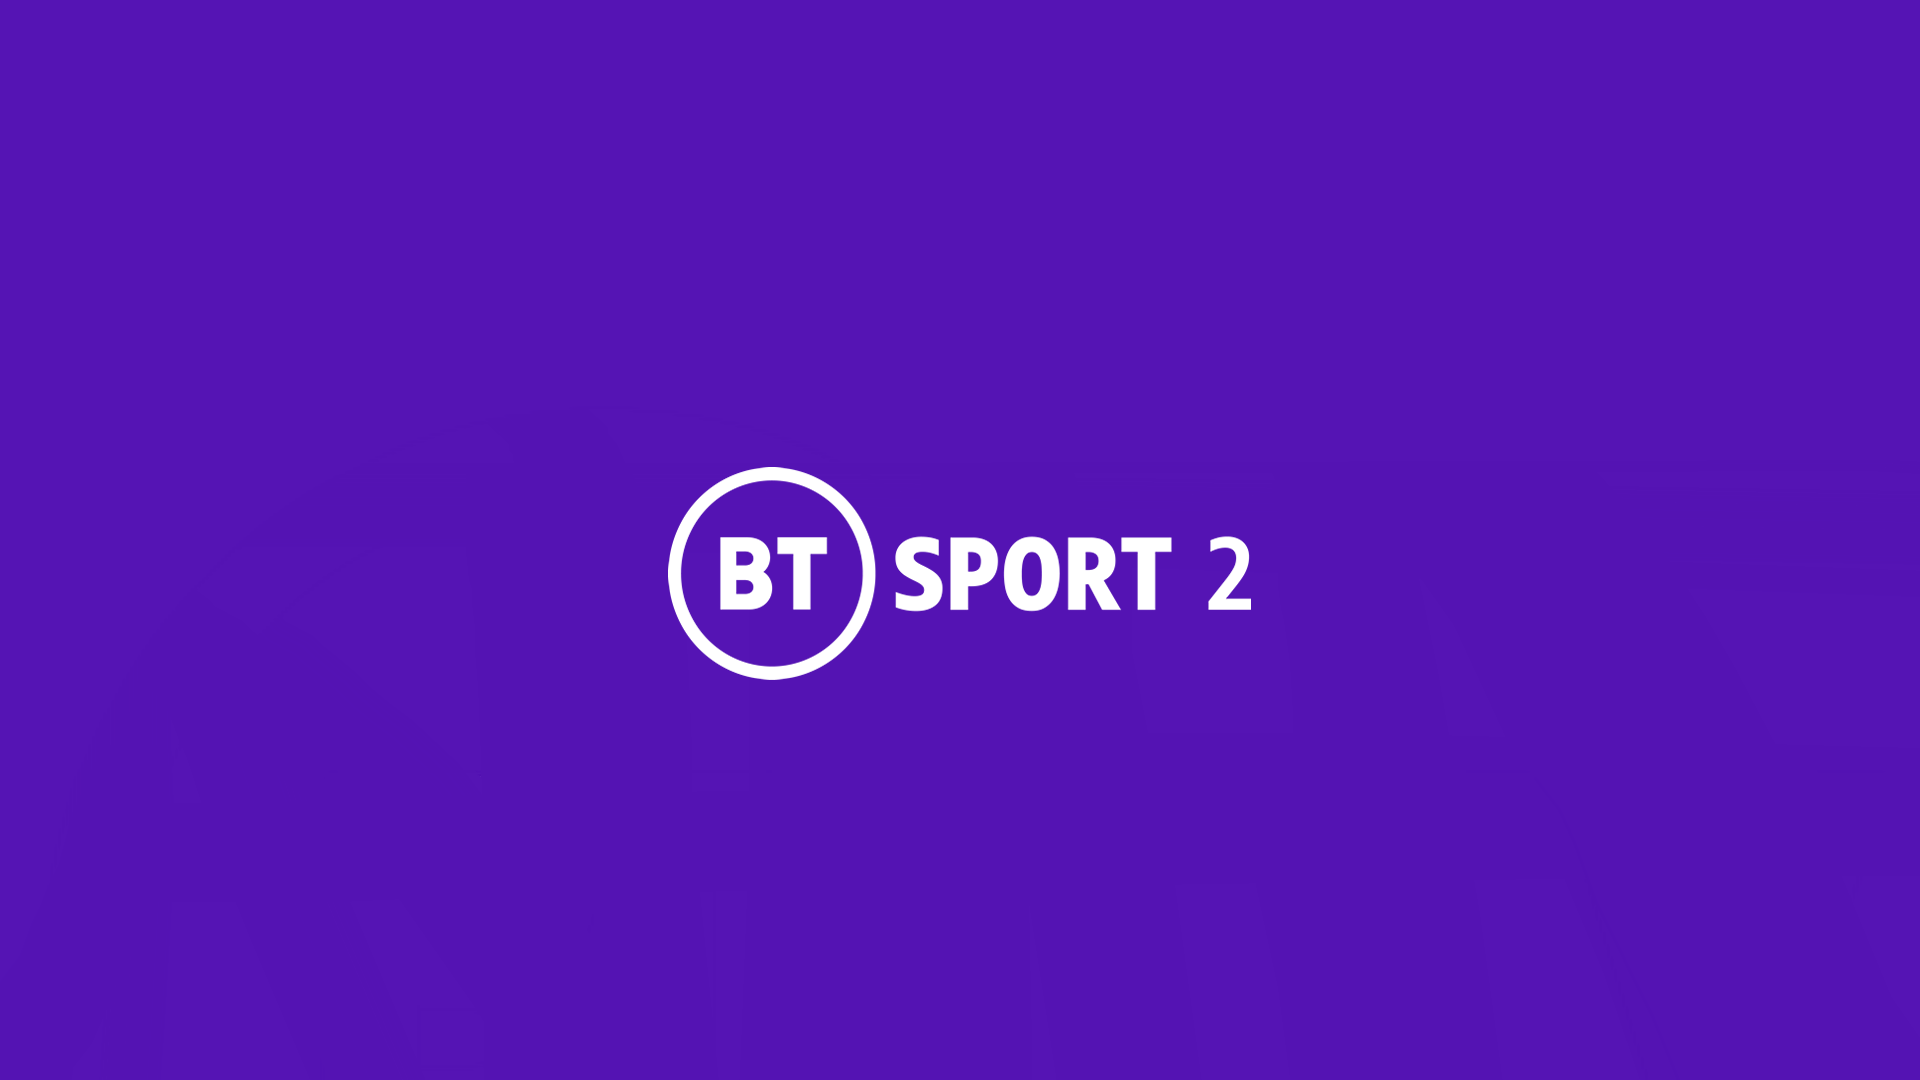 BT SPORTS 2 UK Live Online